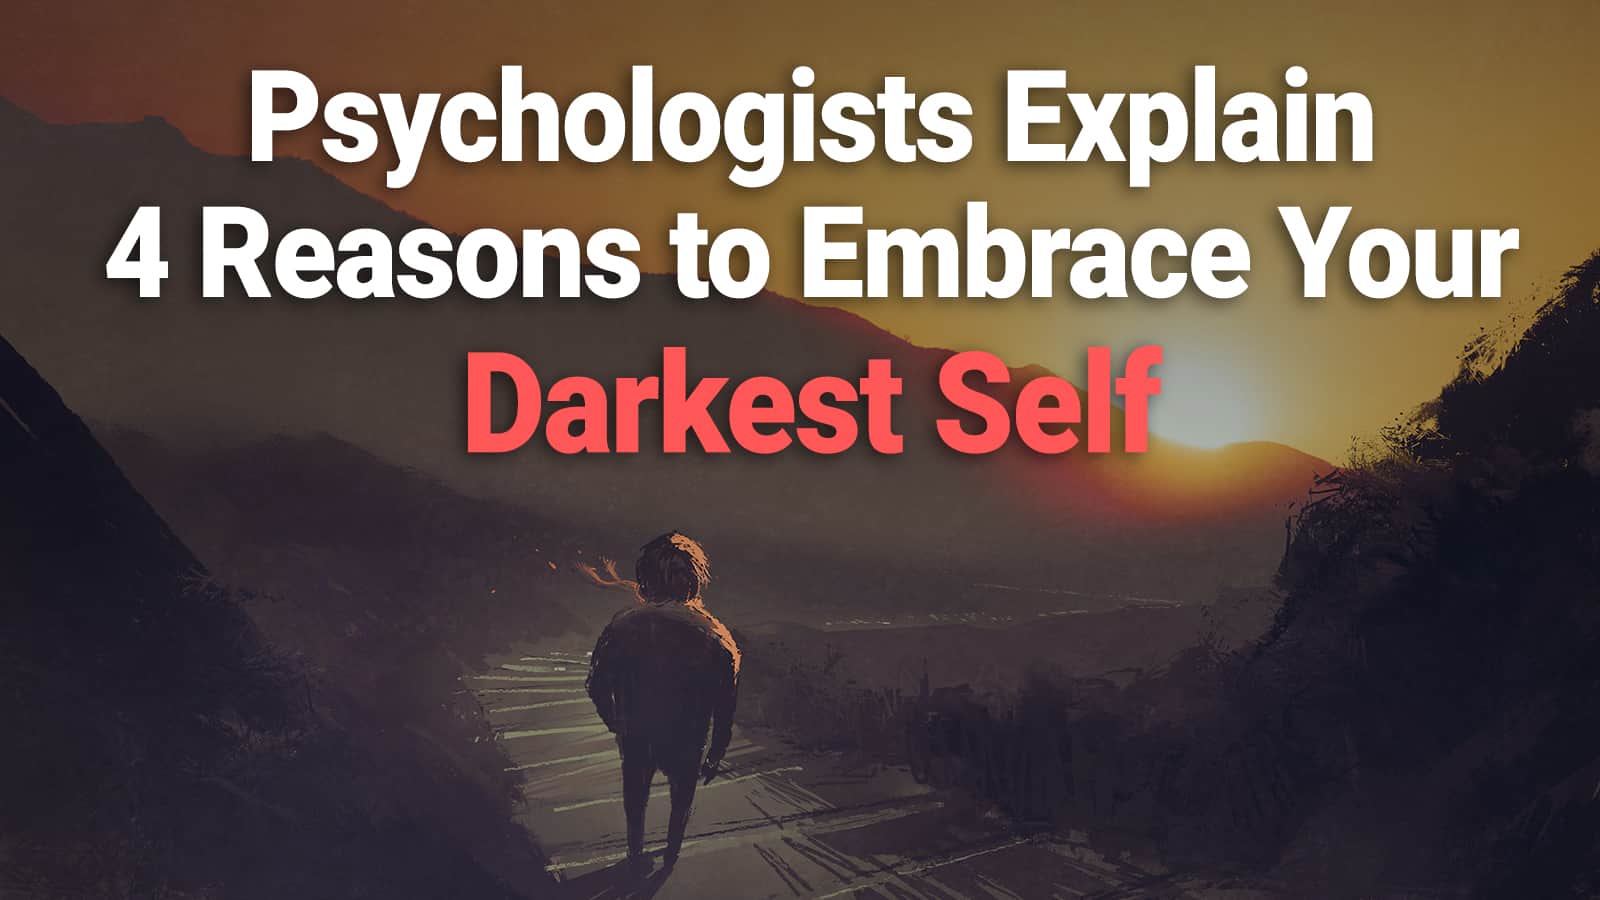 Psychologists Explain 4 Reasons to Embrace Your Darkest Self